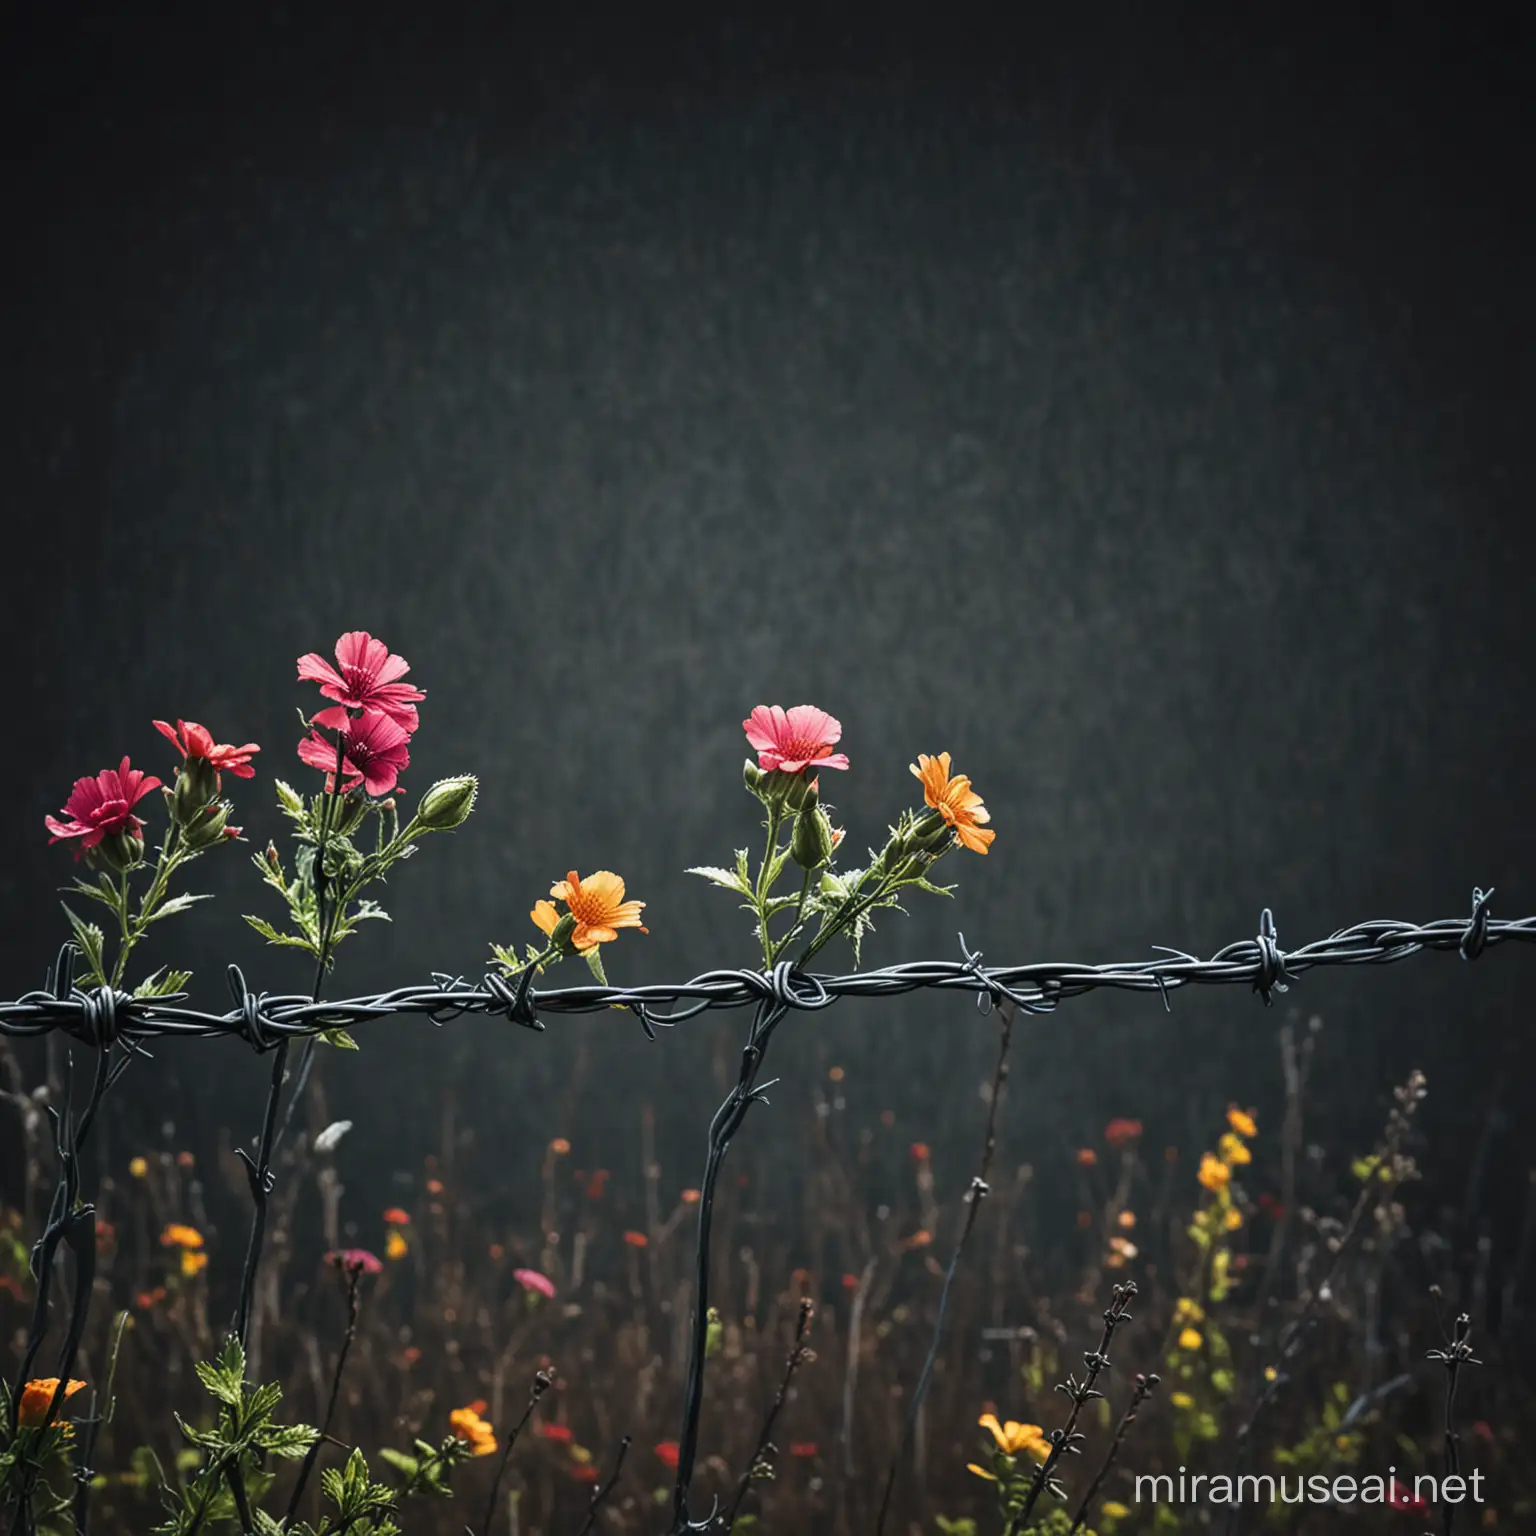 flowers grow on barbed wire. dark background